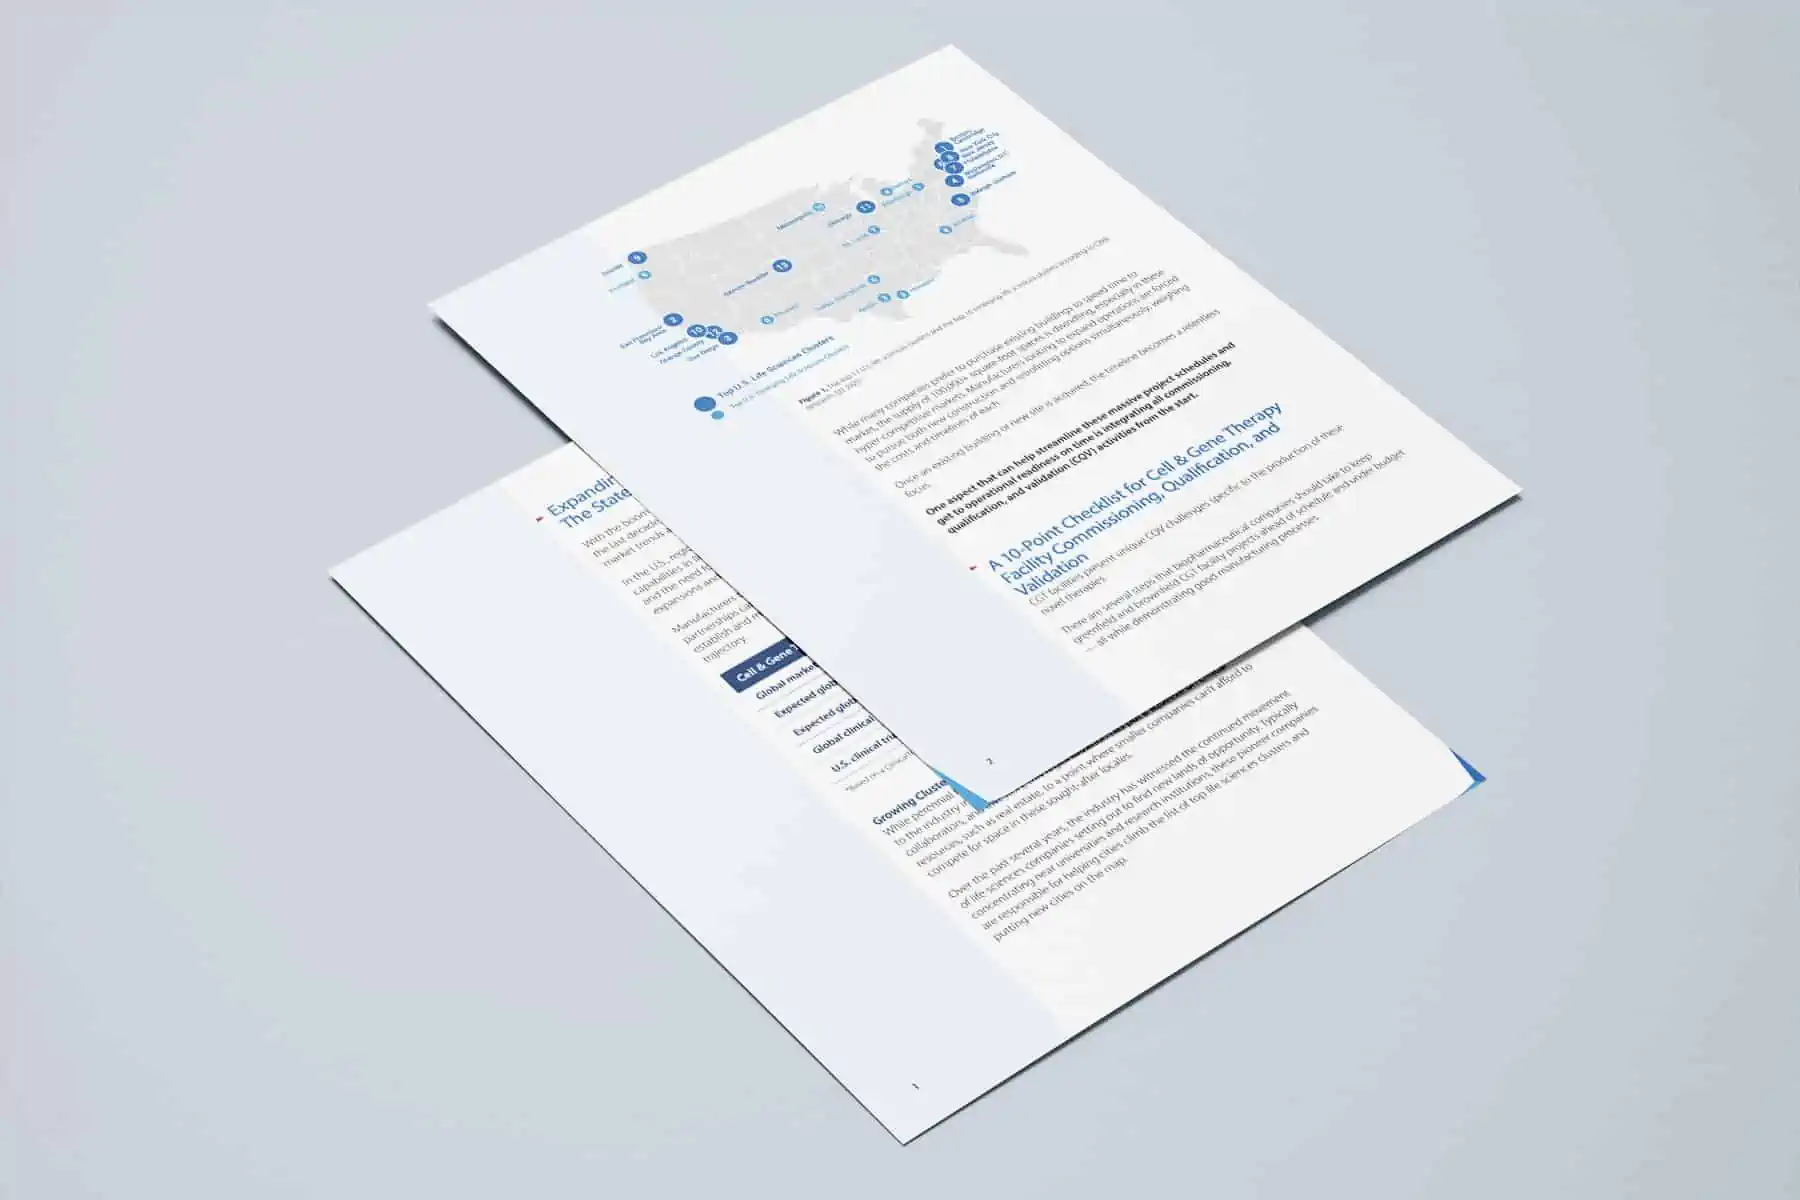 ICQ White Paper design